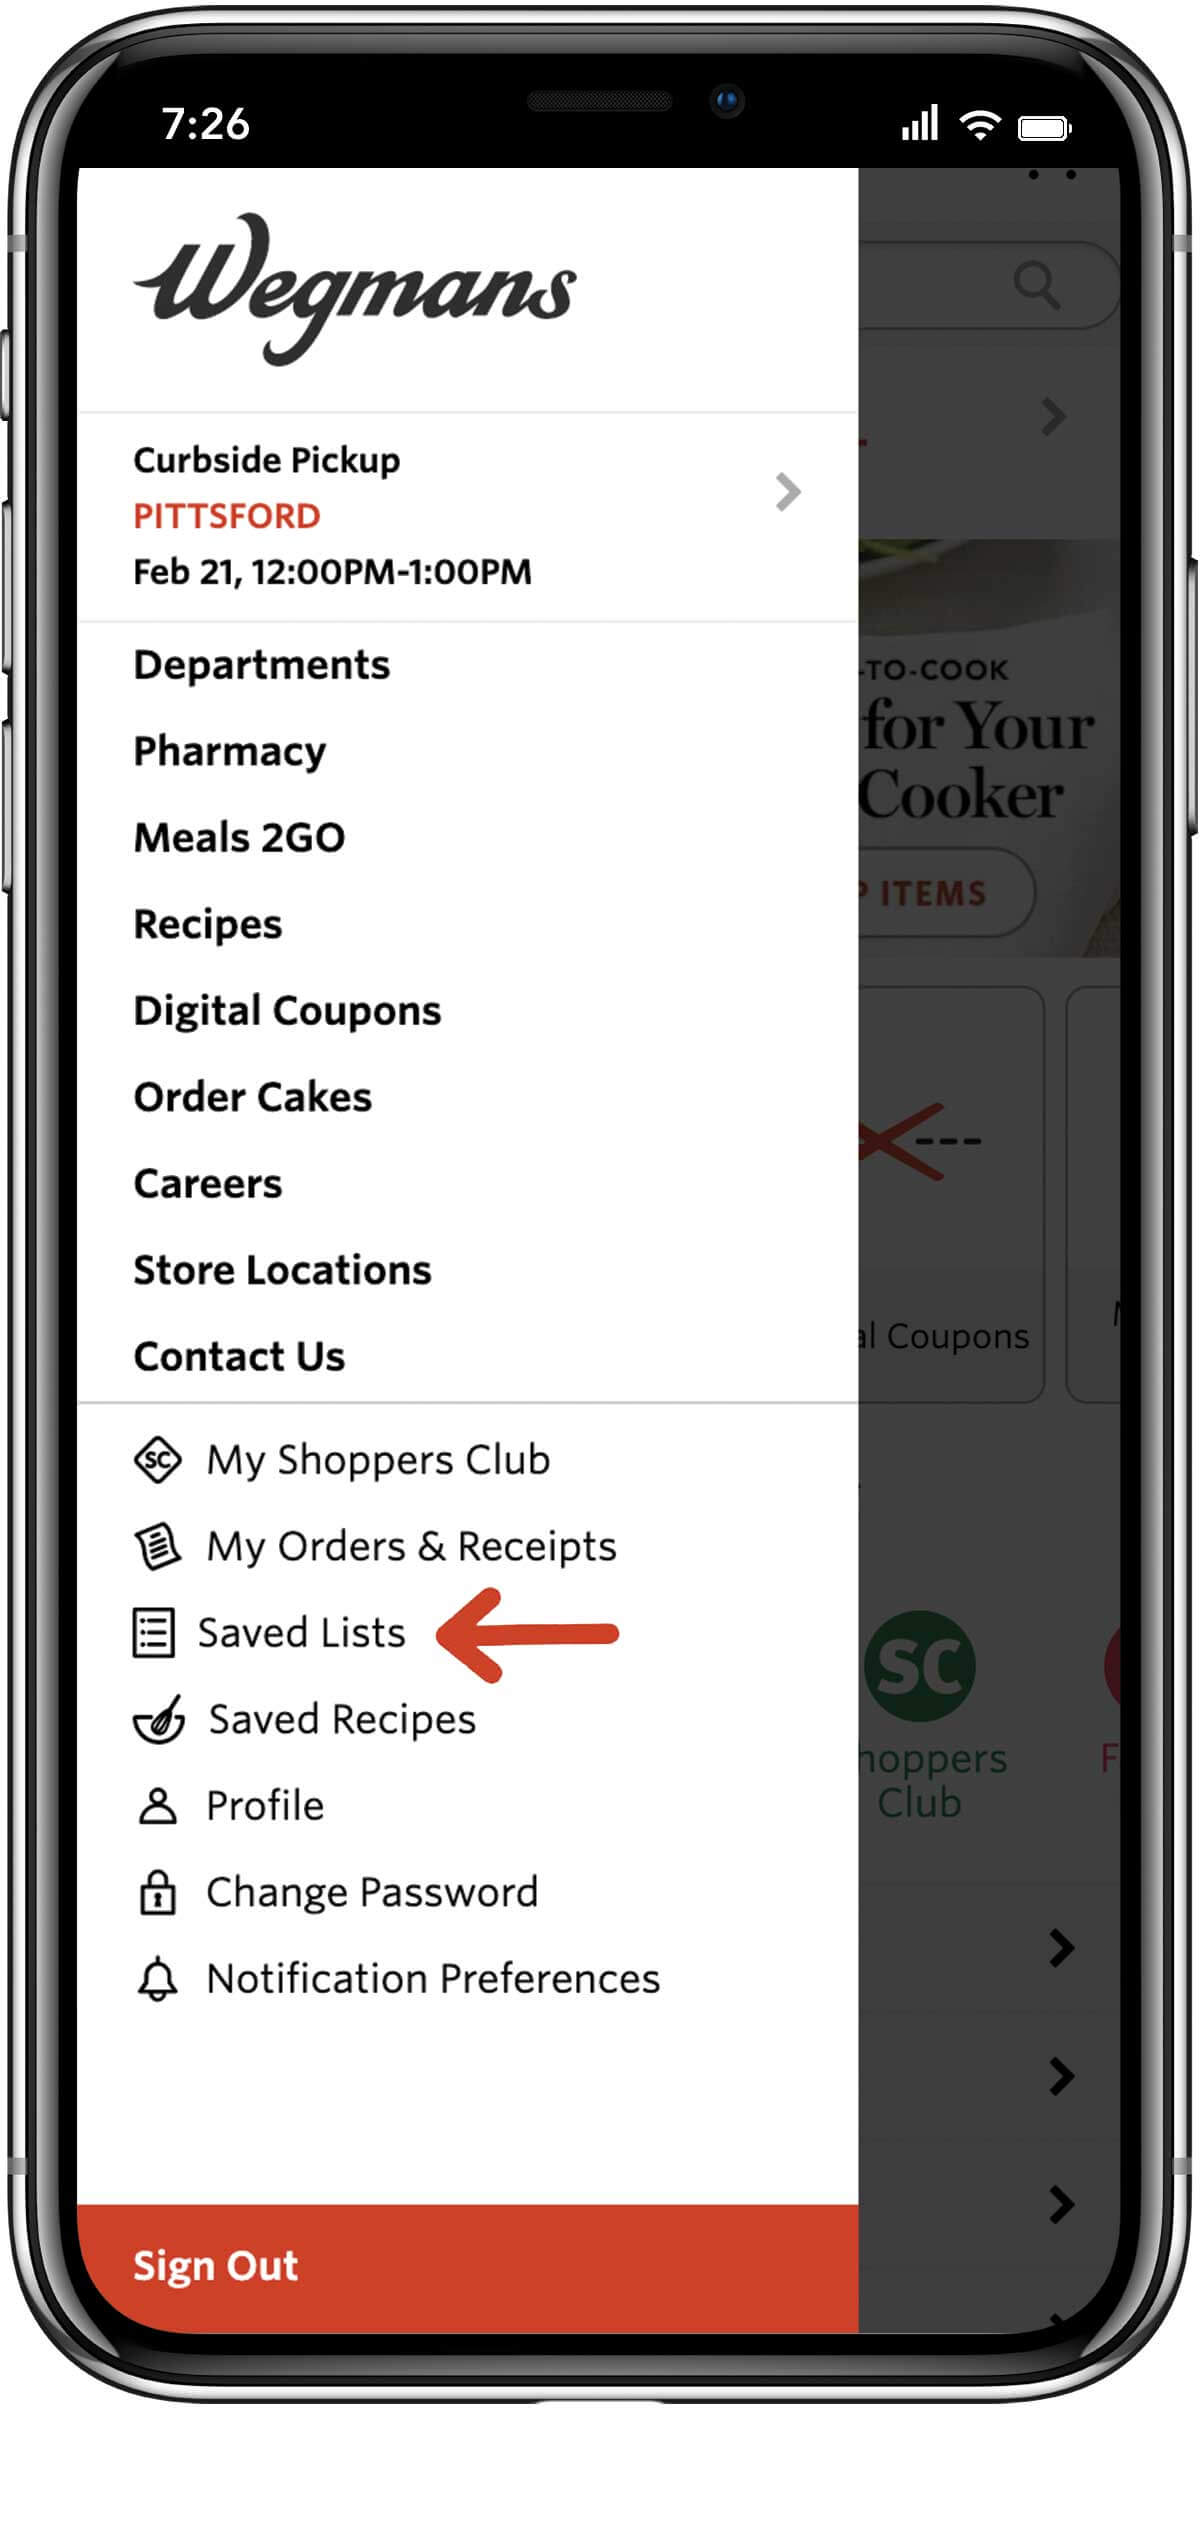 phone screen displaying saved list in navigation menu